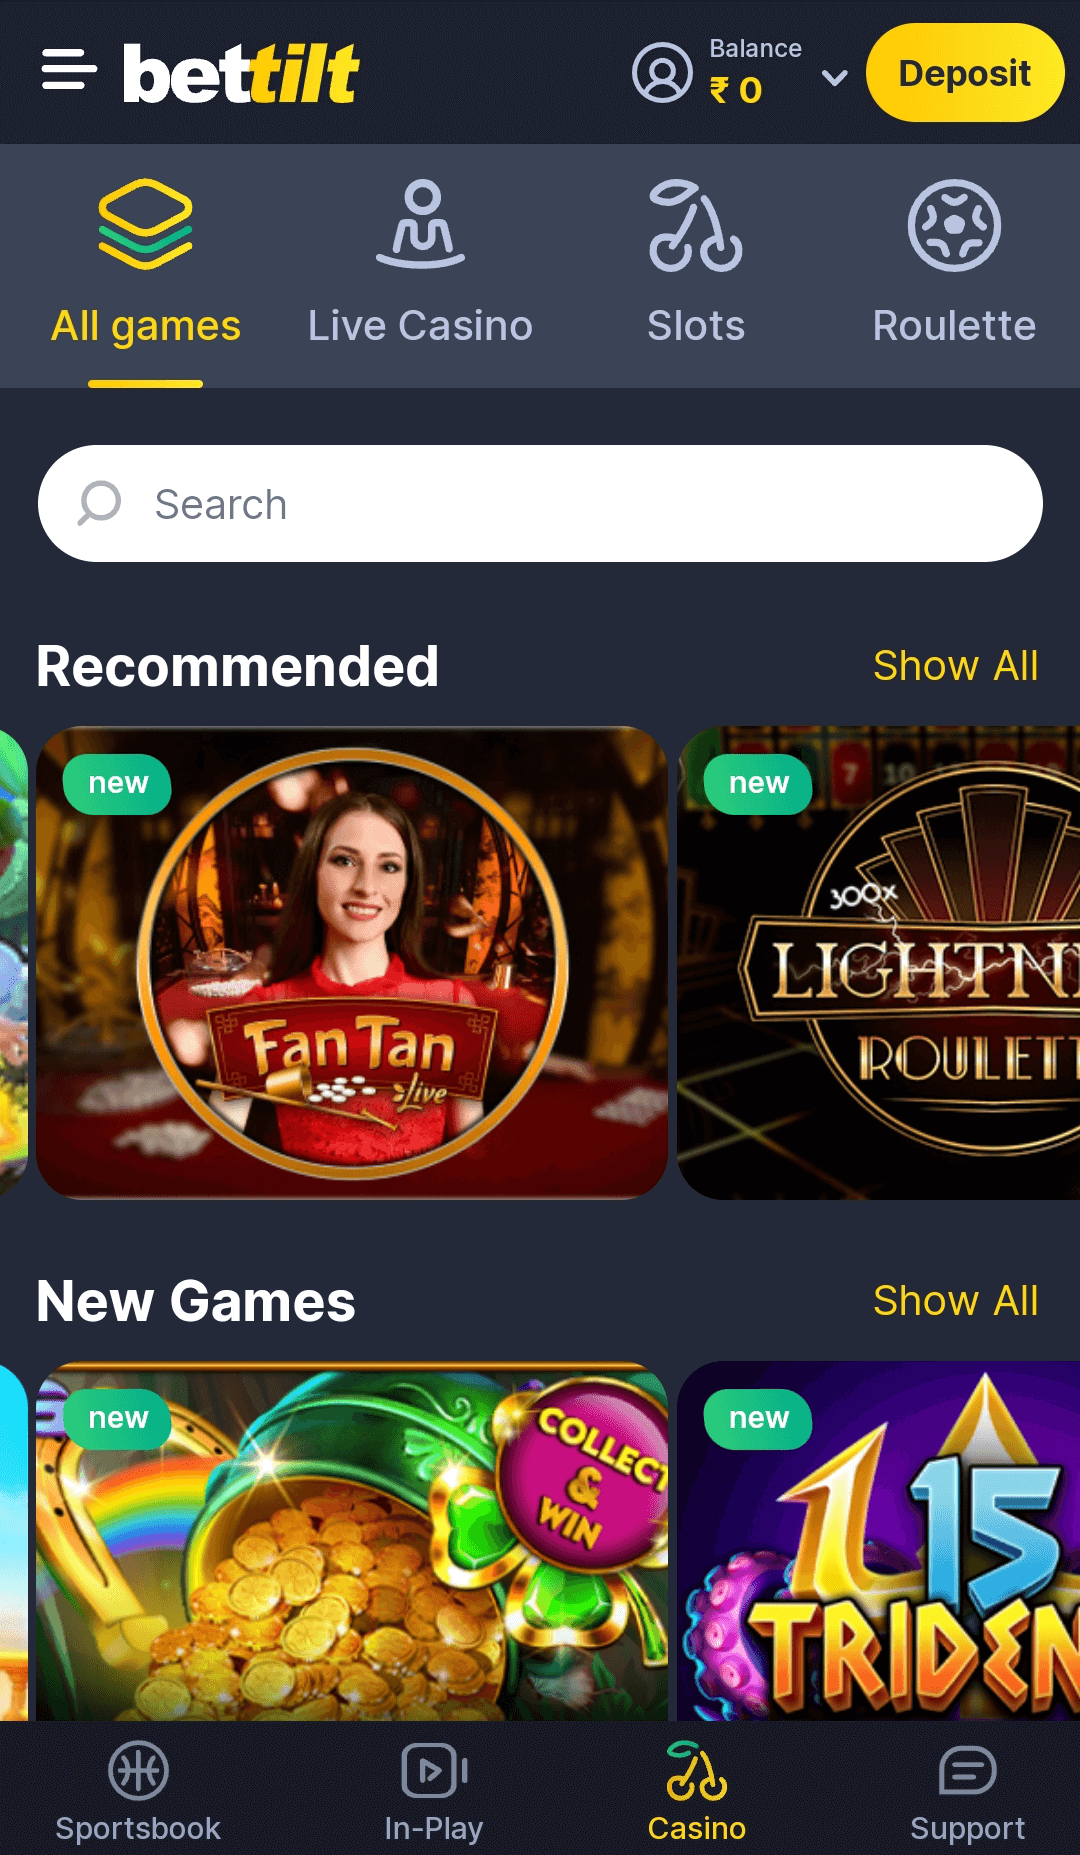 Online casino section in the bettilt app